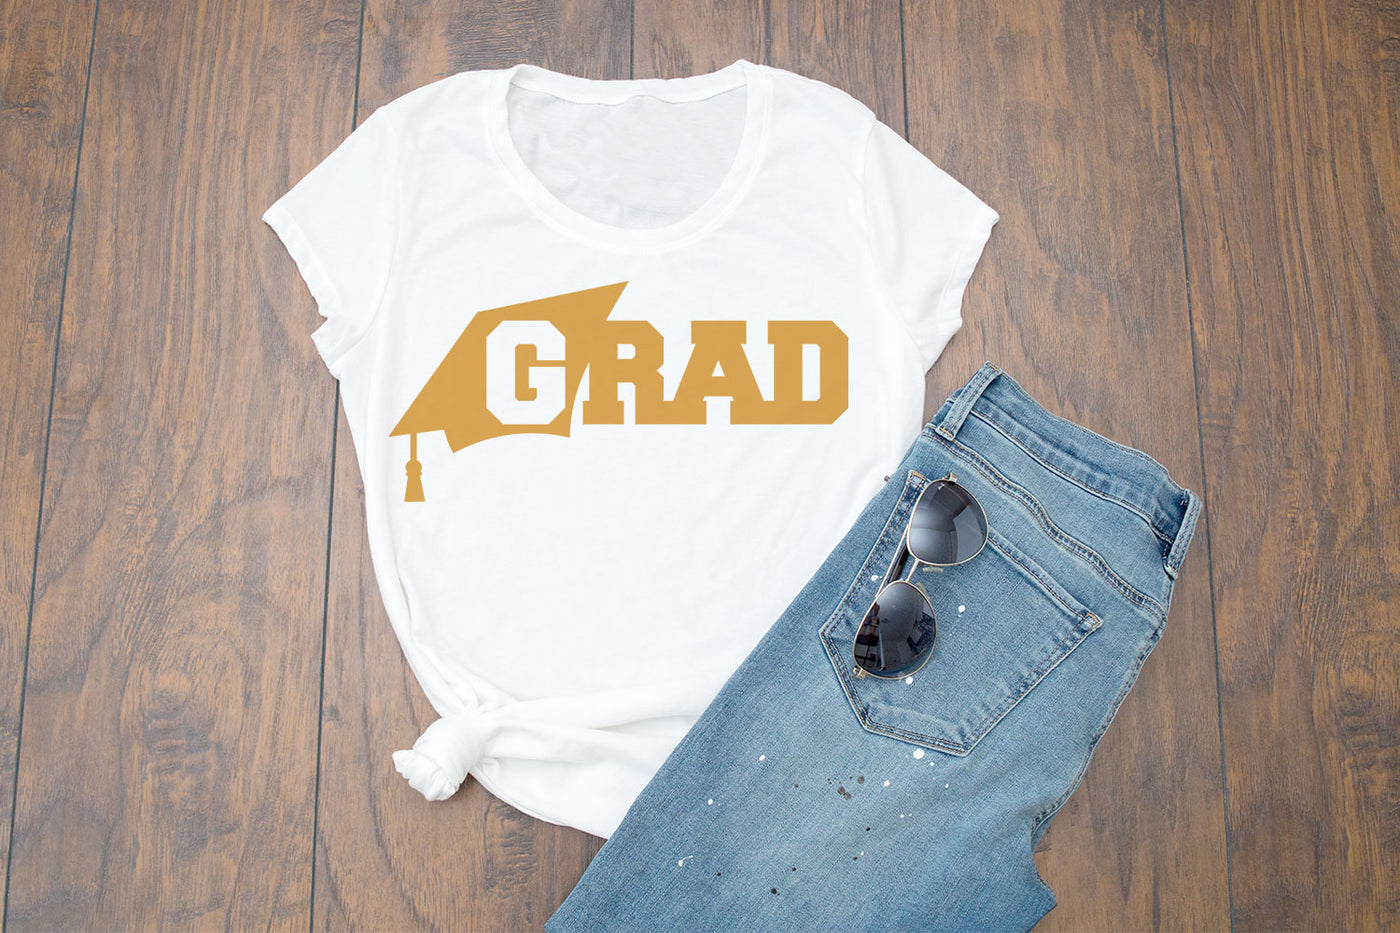 Grad with cap